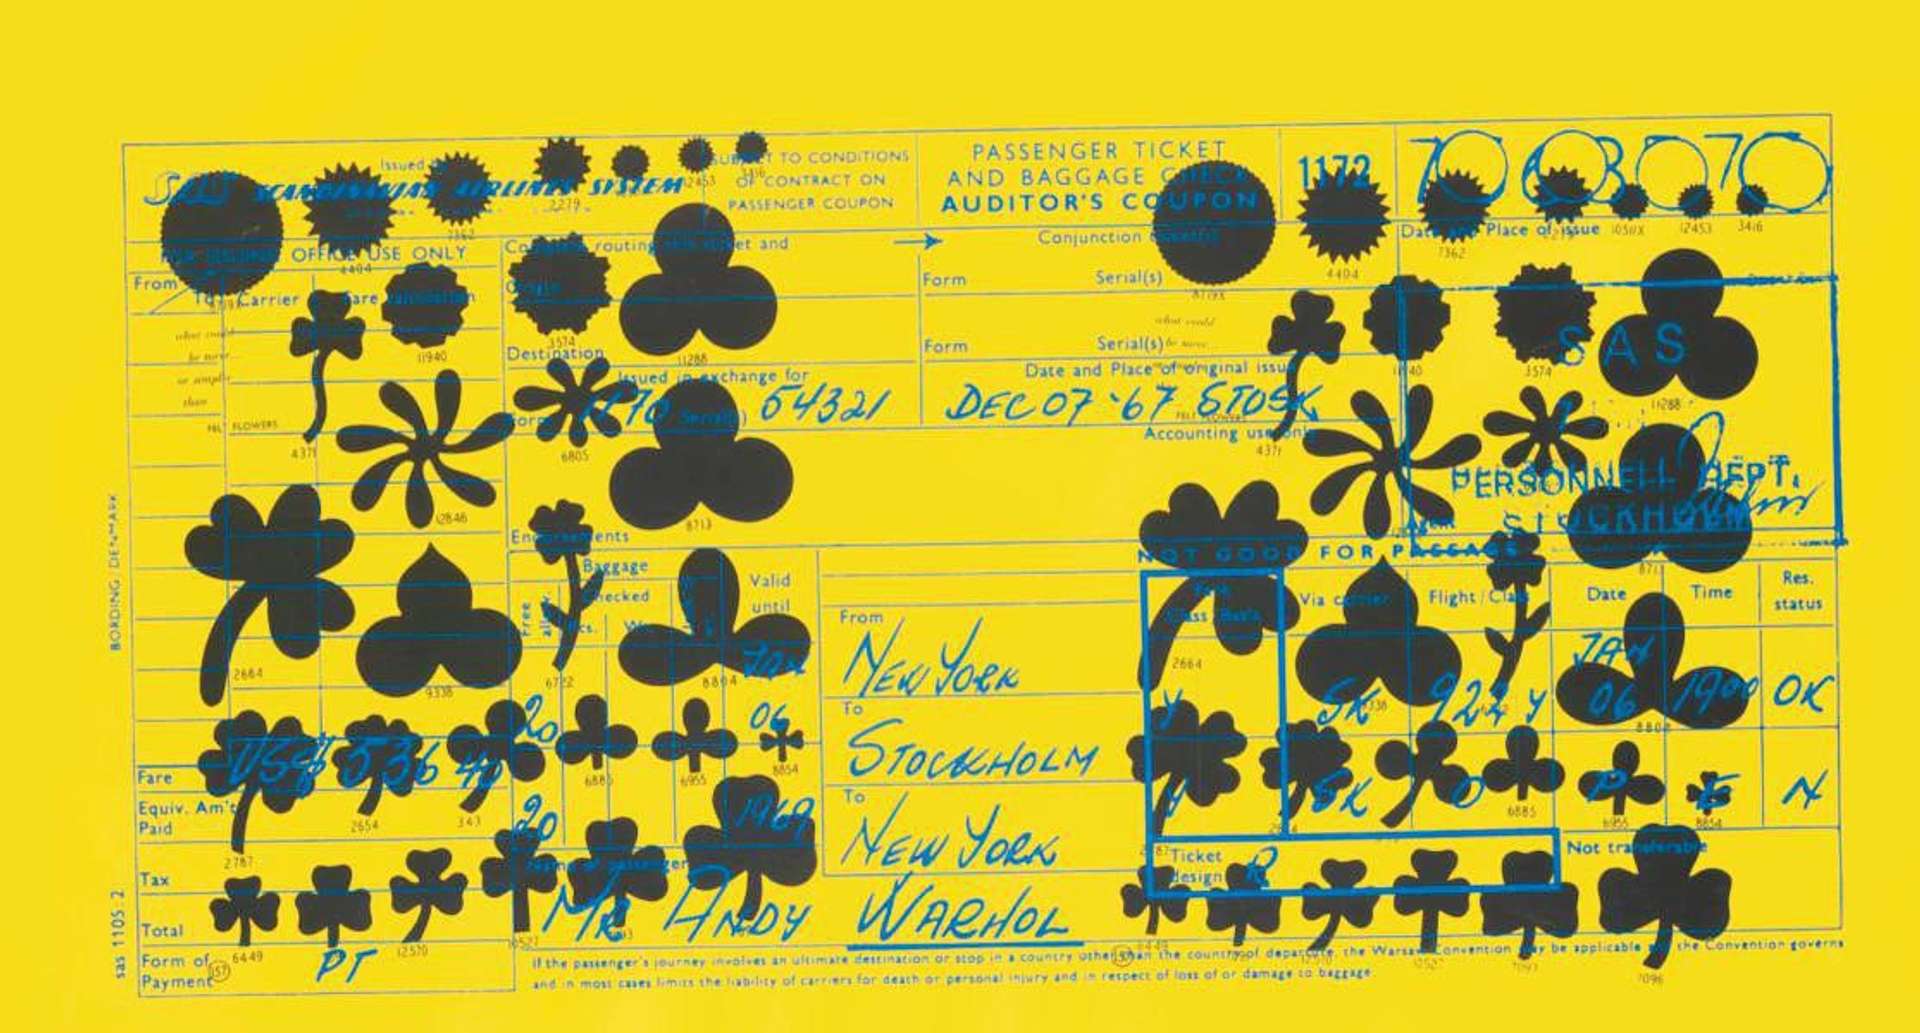 Sas Passenger Ticket (F. & S. II.20) - Signed Print by Andy Warhol 1968 - MyArtBroker